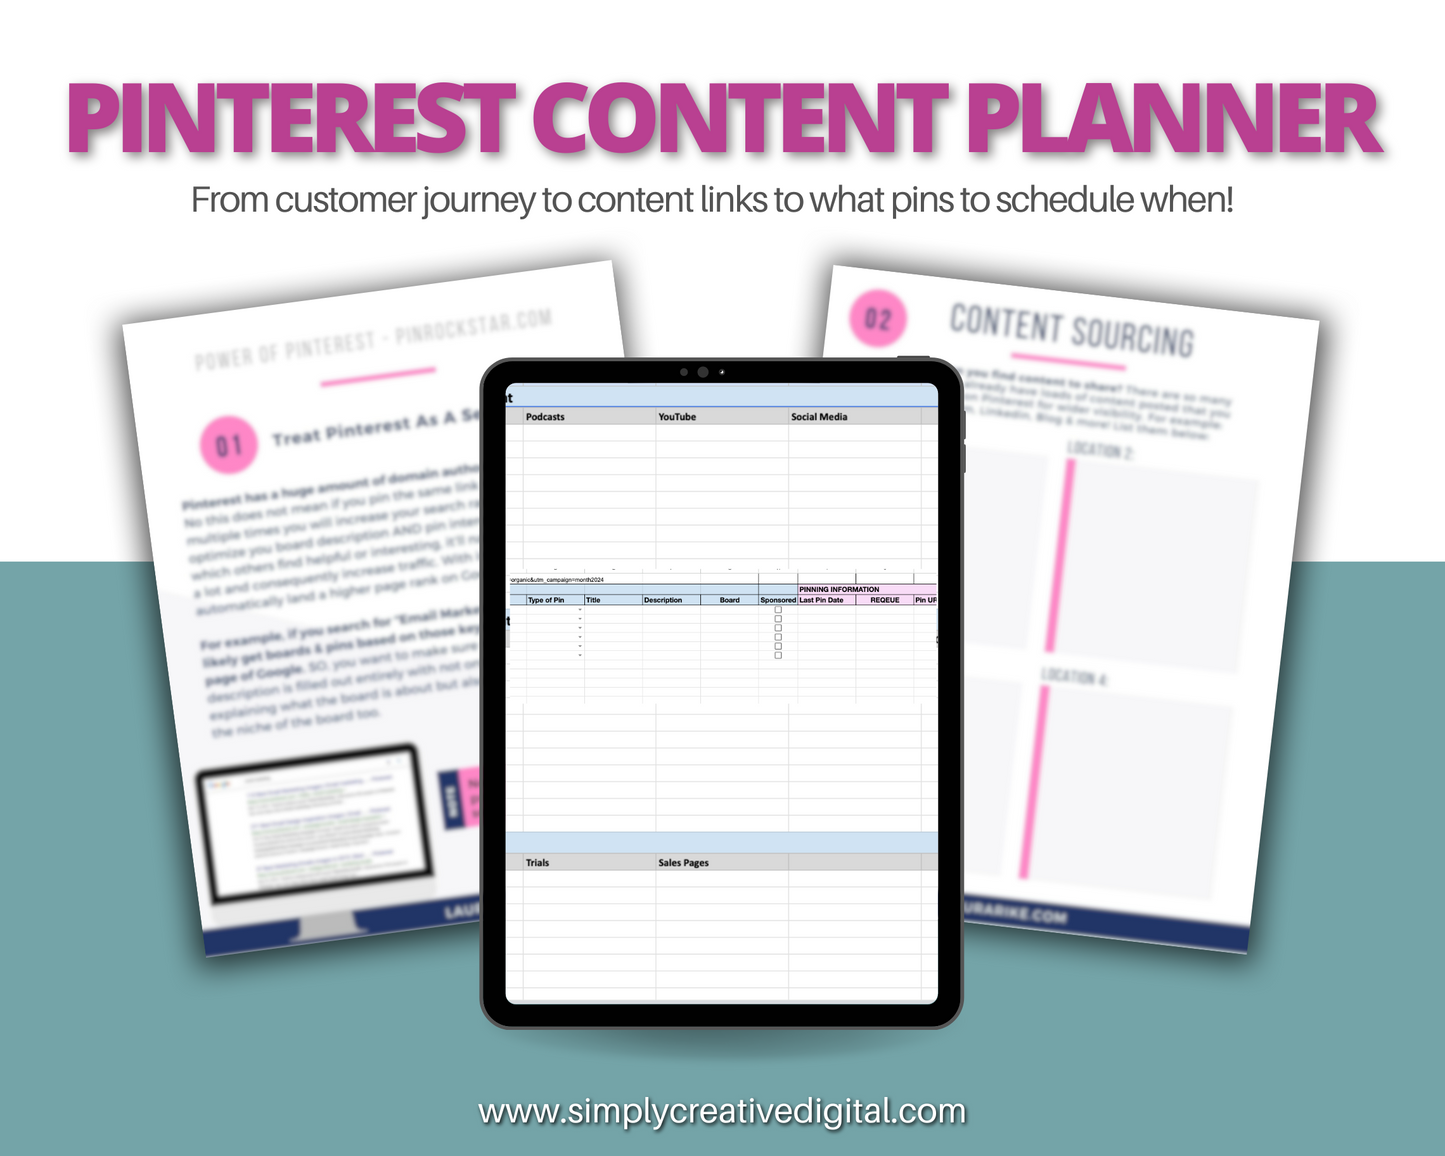 Pintastic Pinterest Content Planner